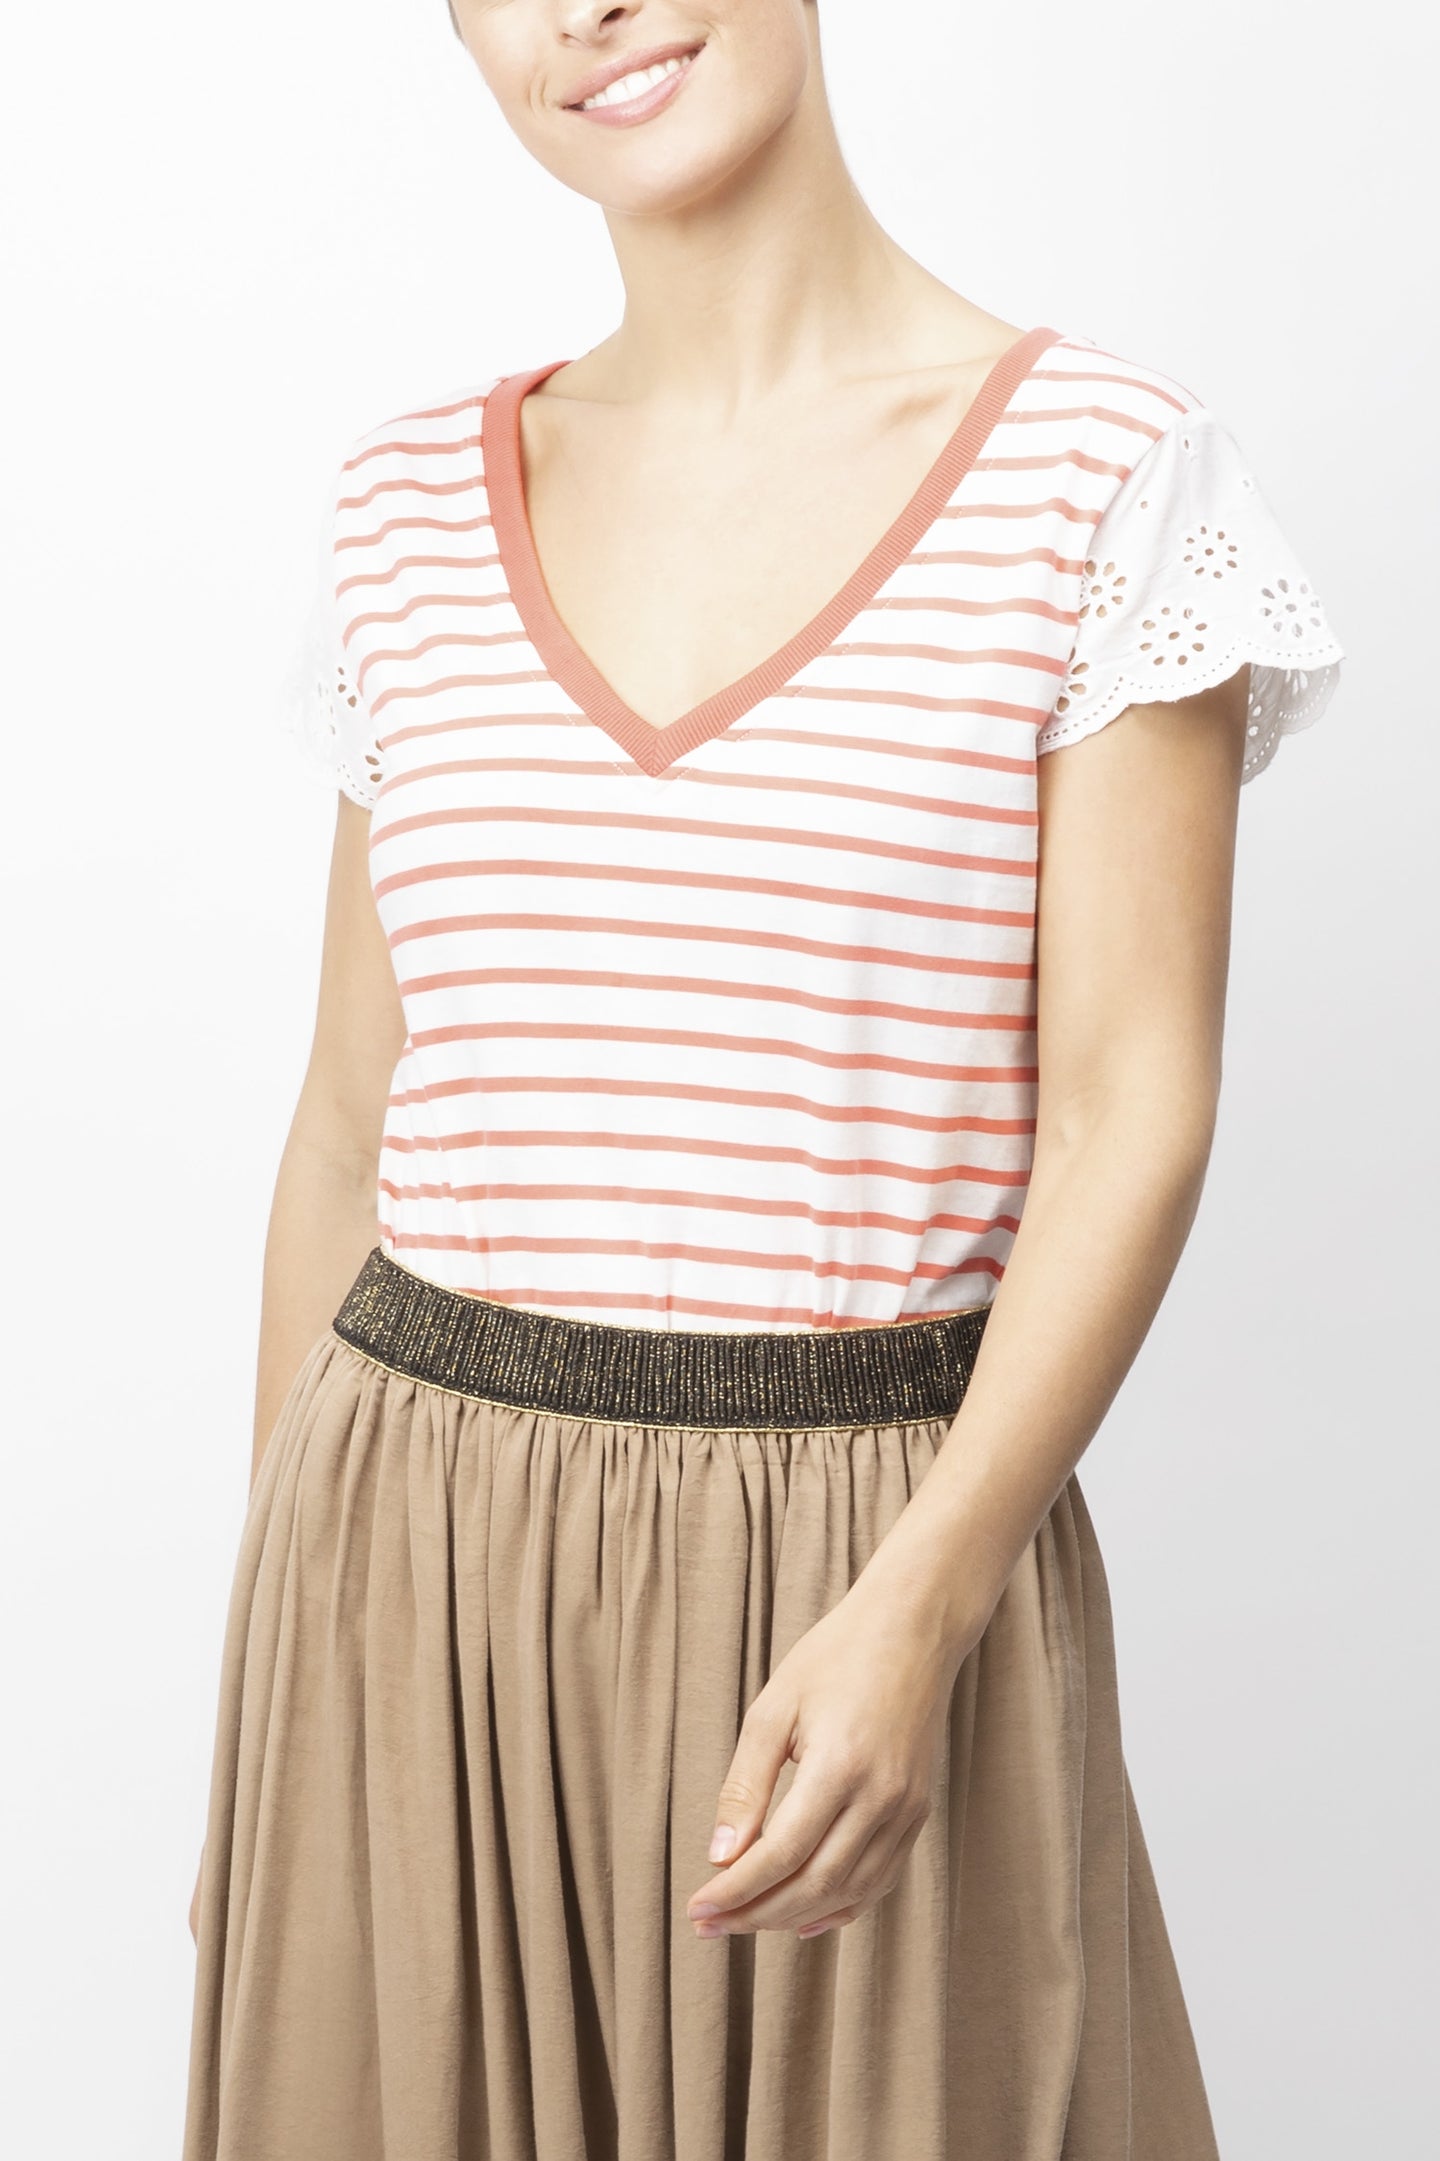 Striped Lace T-shirt